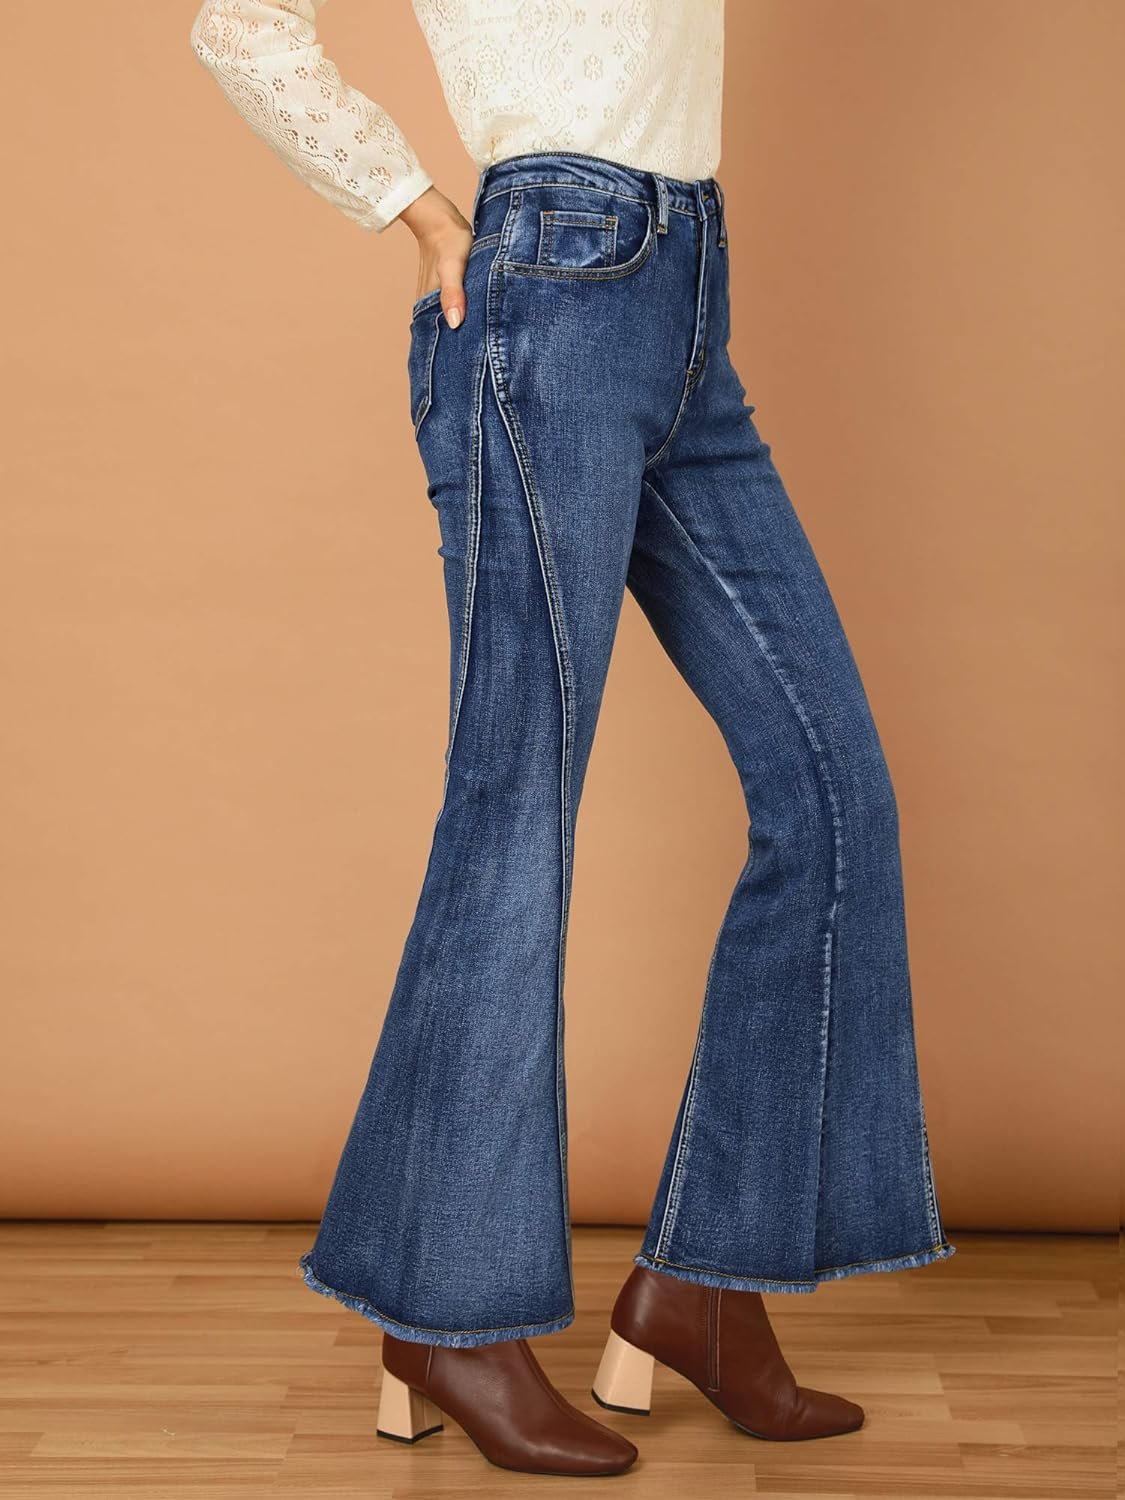 Allegra K Womens 70s Vintage Flare Jeans High Waist Stretch Denim Bell Bottoms Jeans